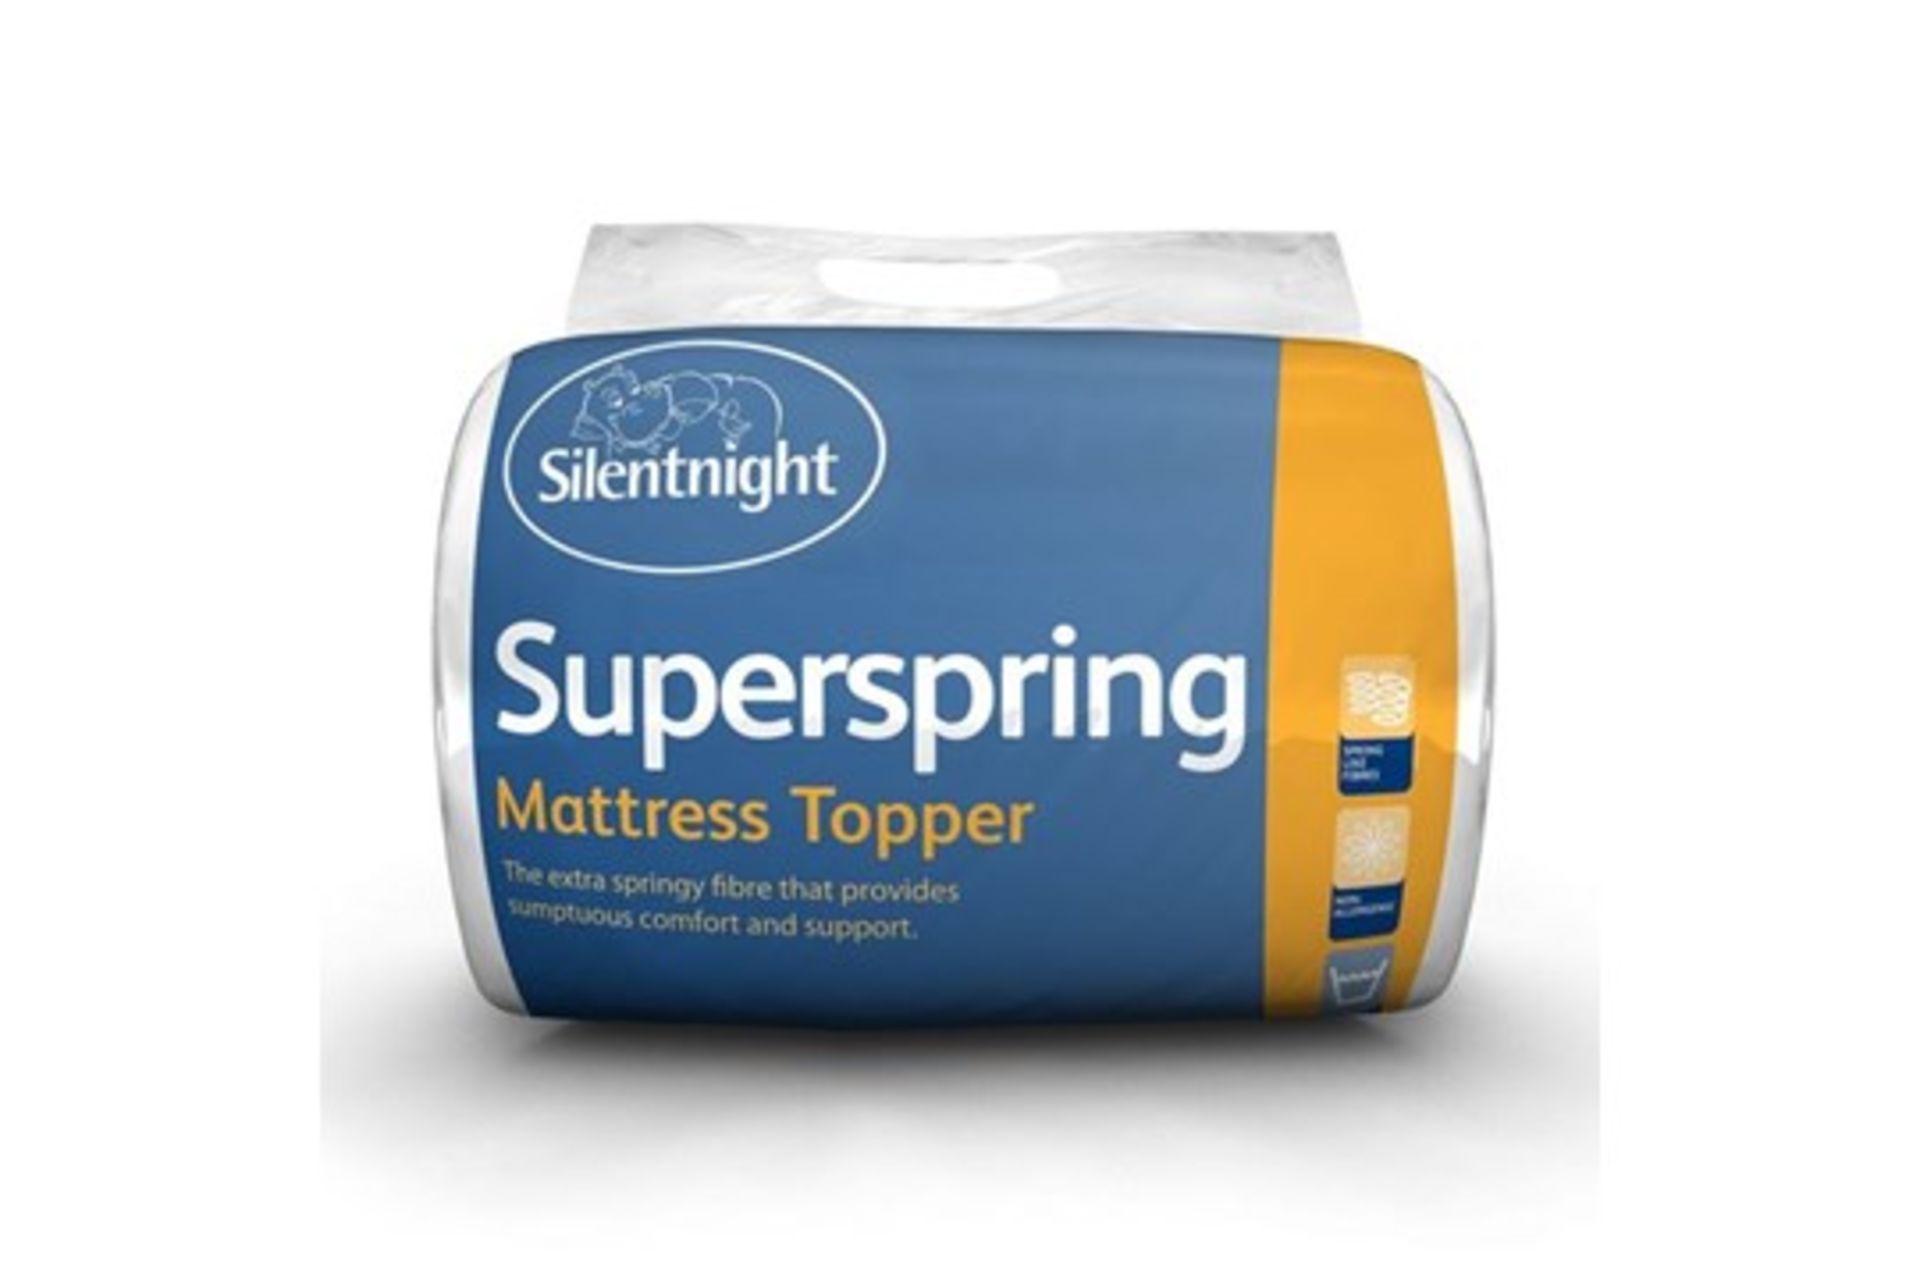 Silentnight Super Spring mattress topper, kingsize, brand new and packaged. RRP £29.99